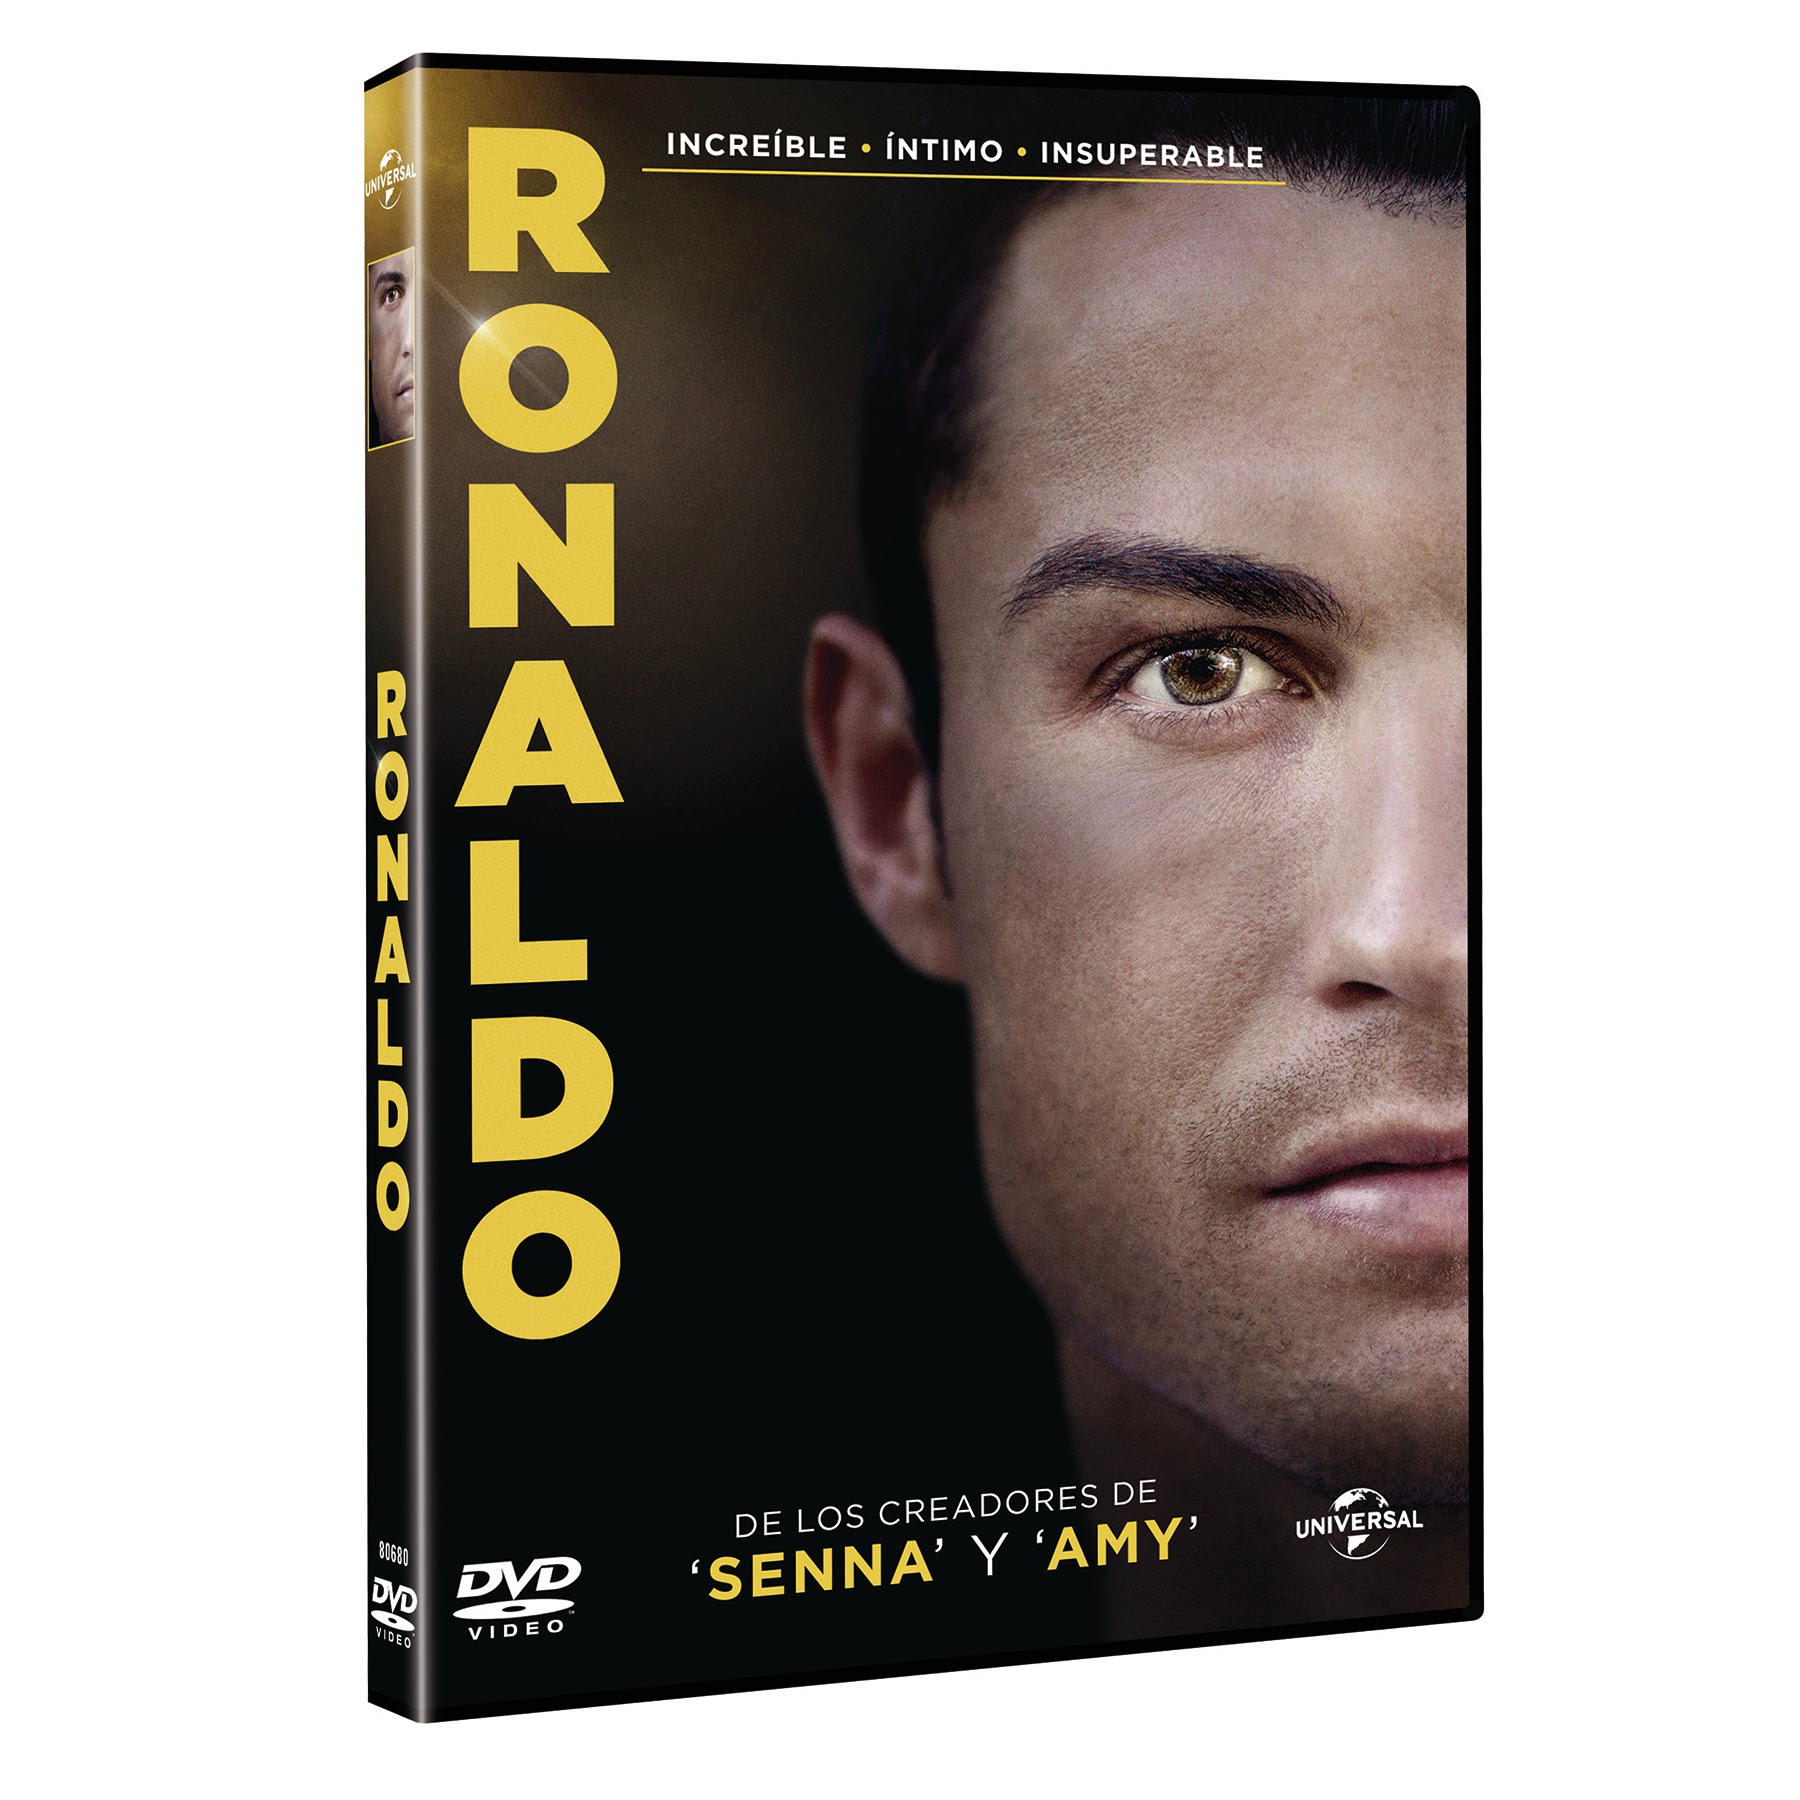 Real Madrid Ronaldo DVD